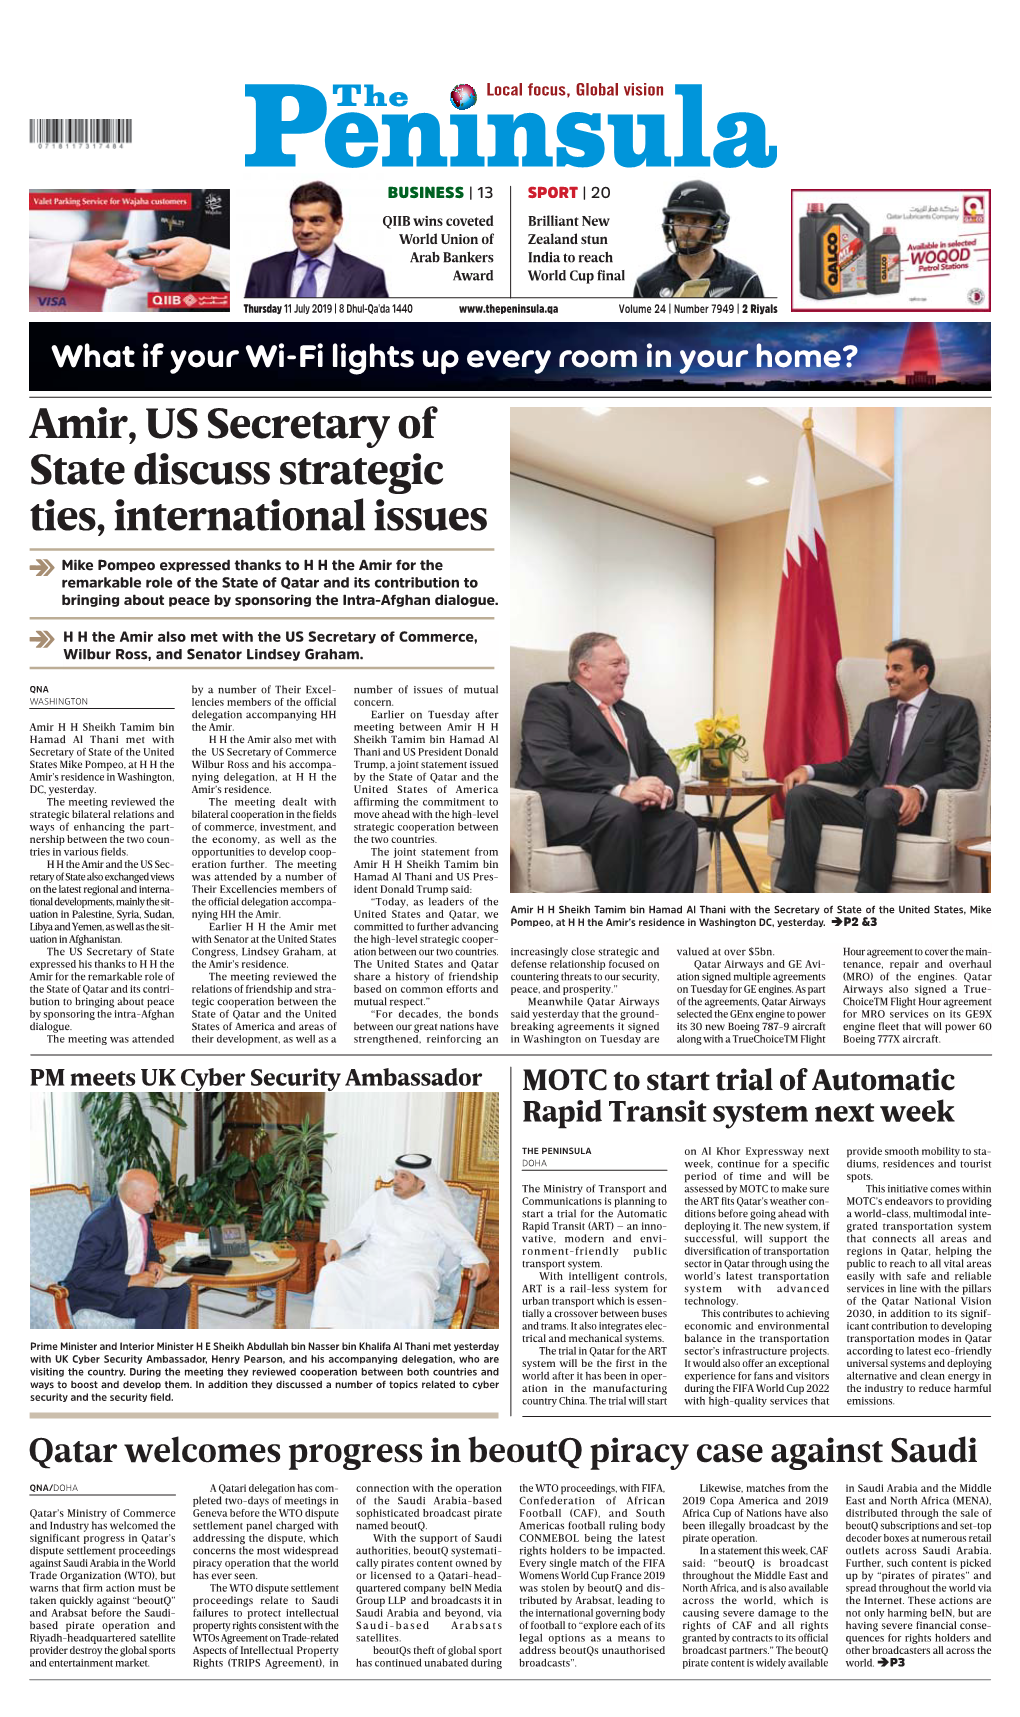 Amir, US Secretary of State Discuss Strategic Ties, International Issues